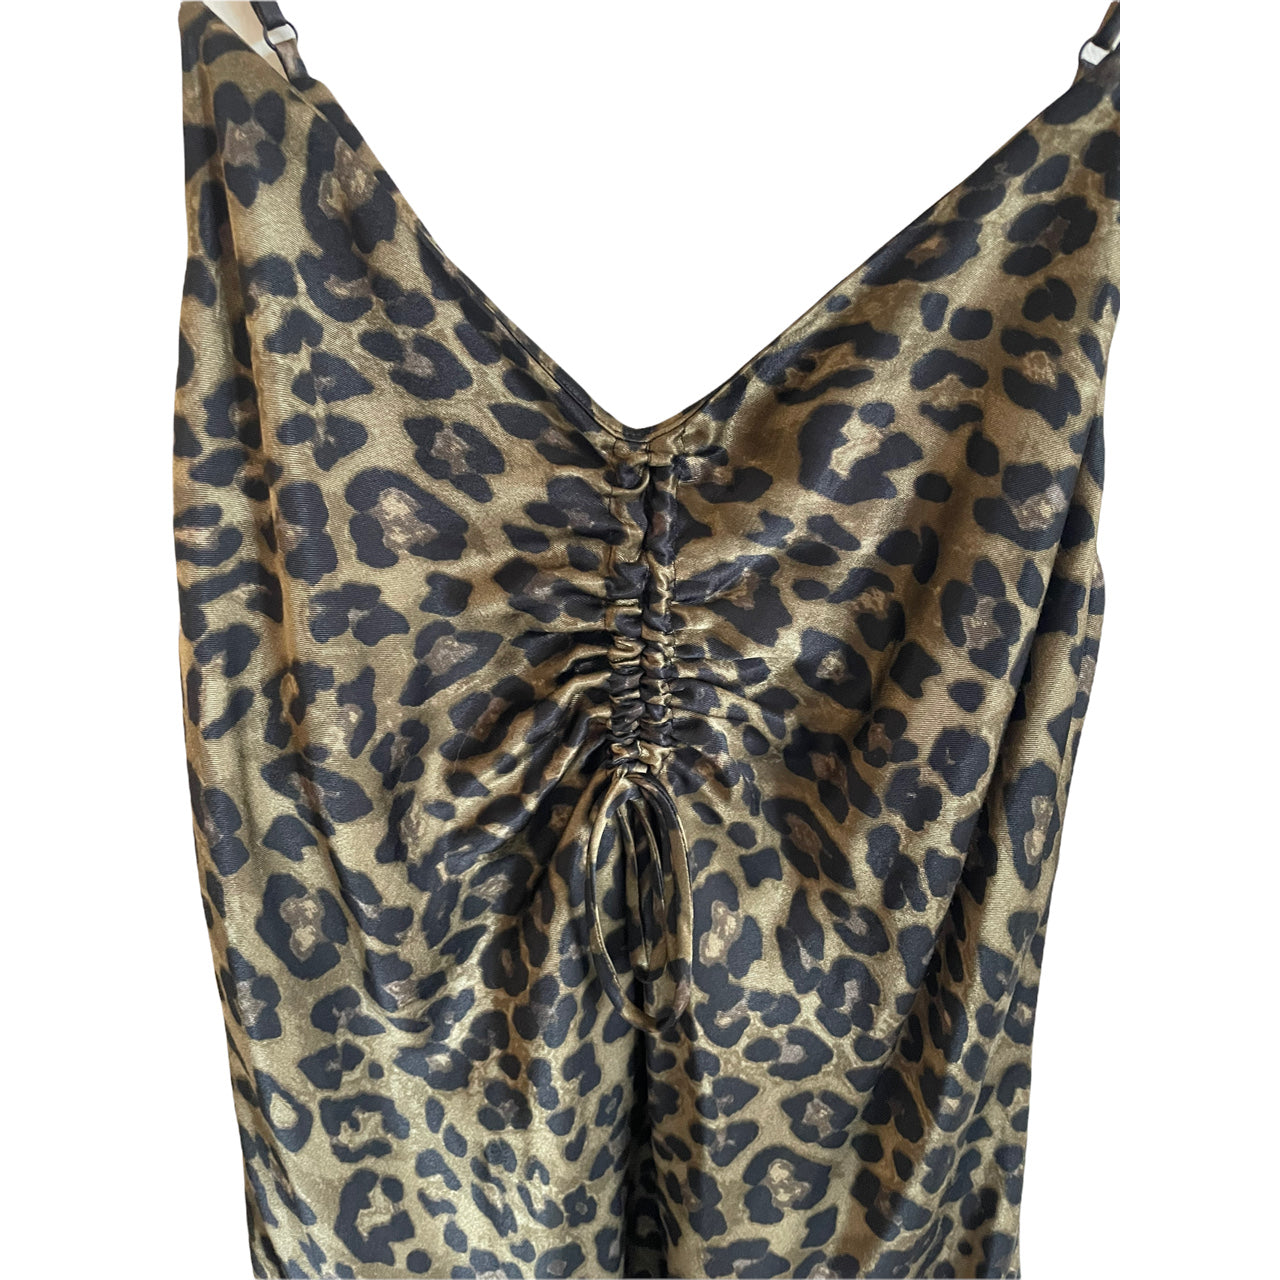 Zara Leopard Print Silky Dress